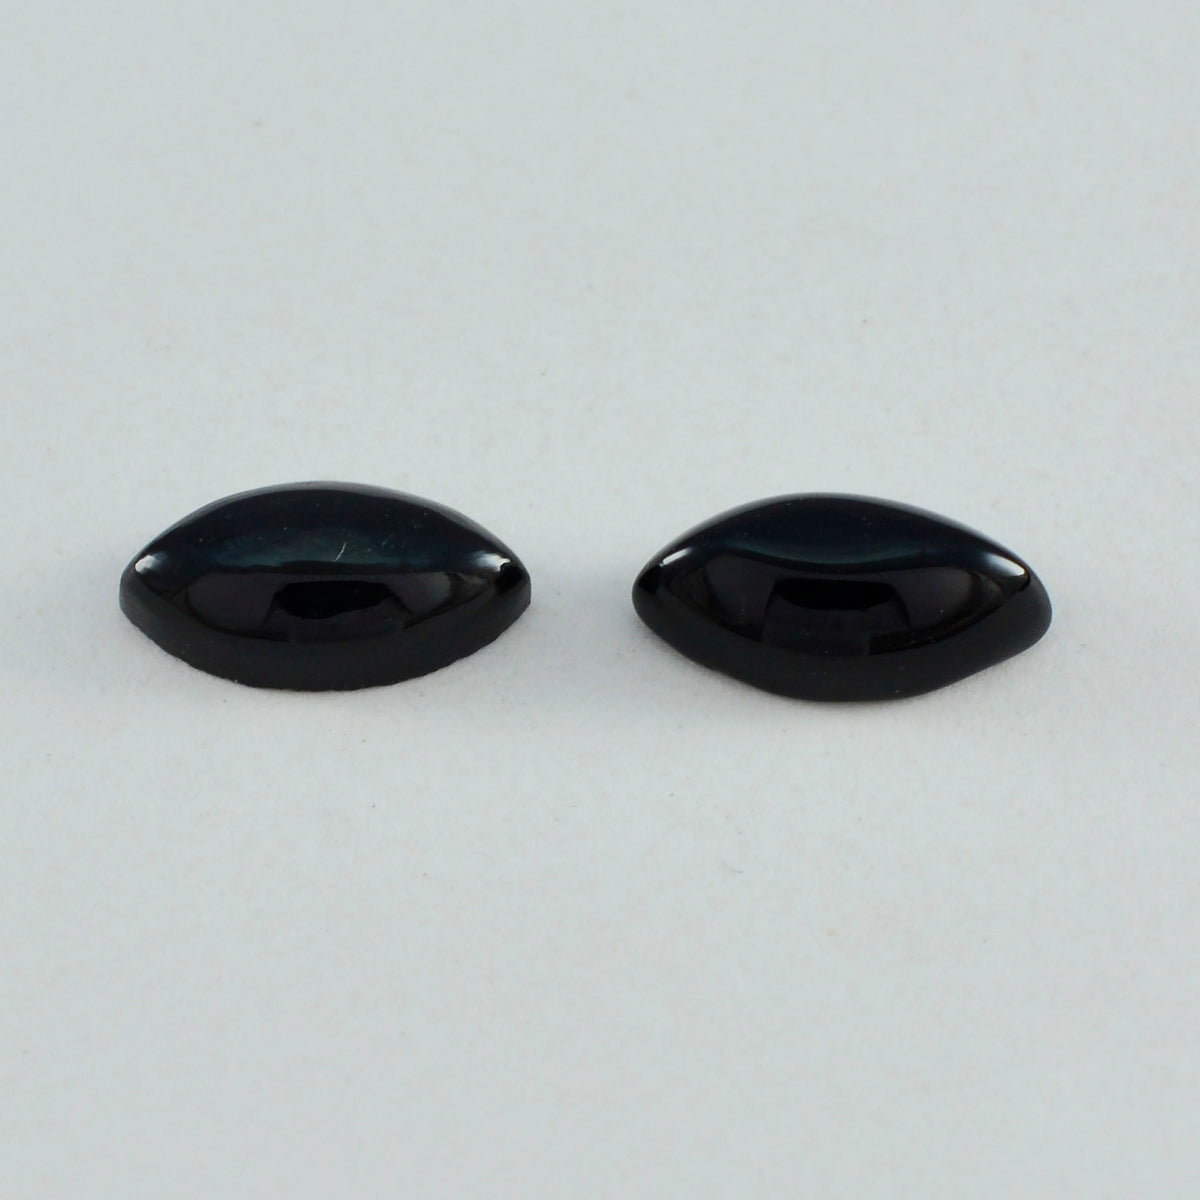 Riyogems 1PC zwarte onyx cabochon 7x14 mm markiezin vorm goede kwaliteit edelsteen